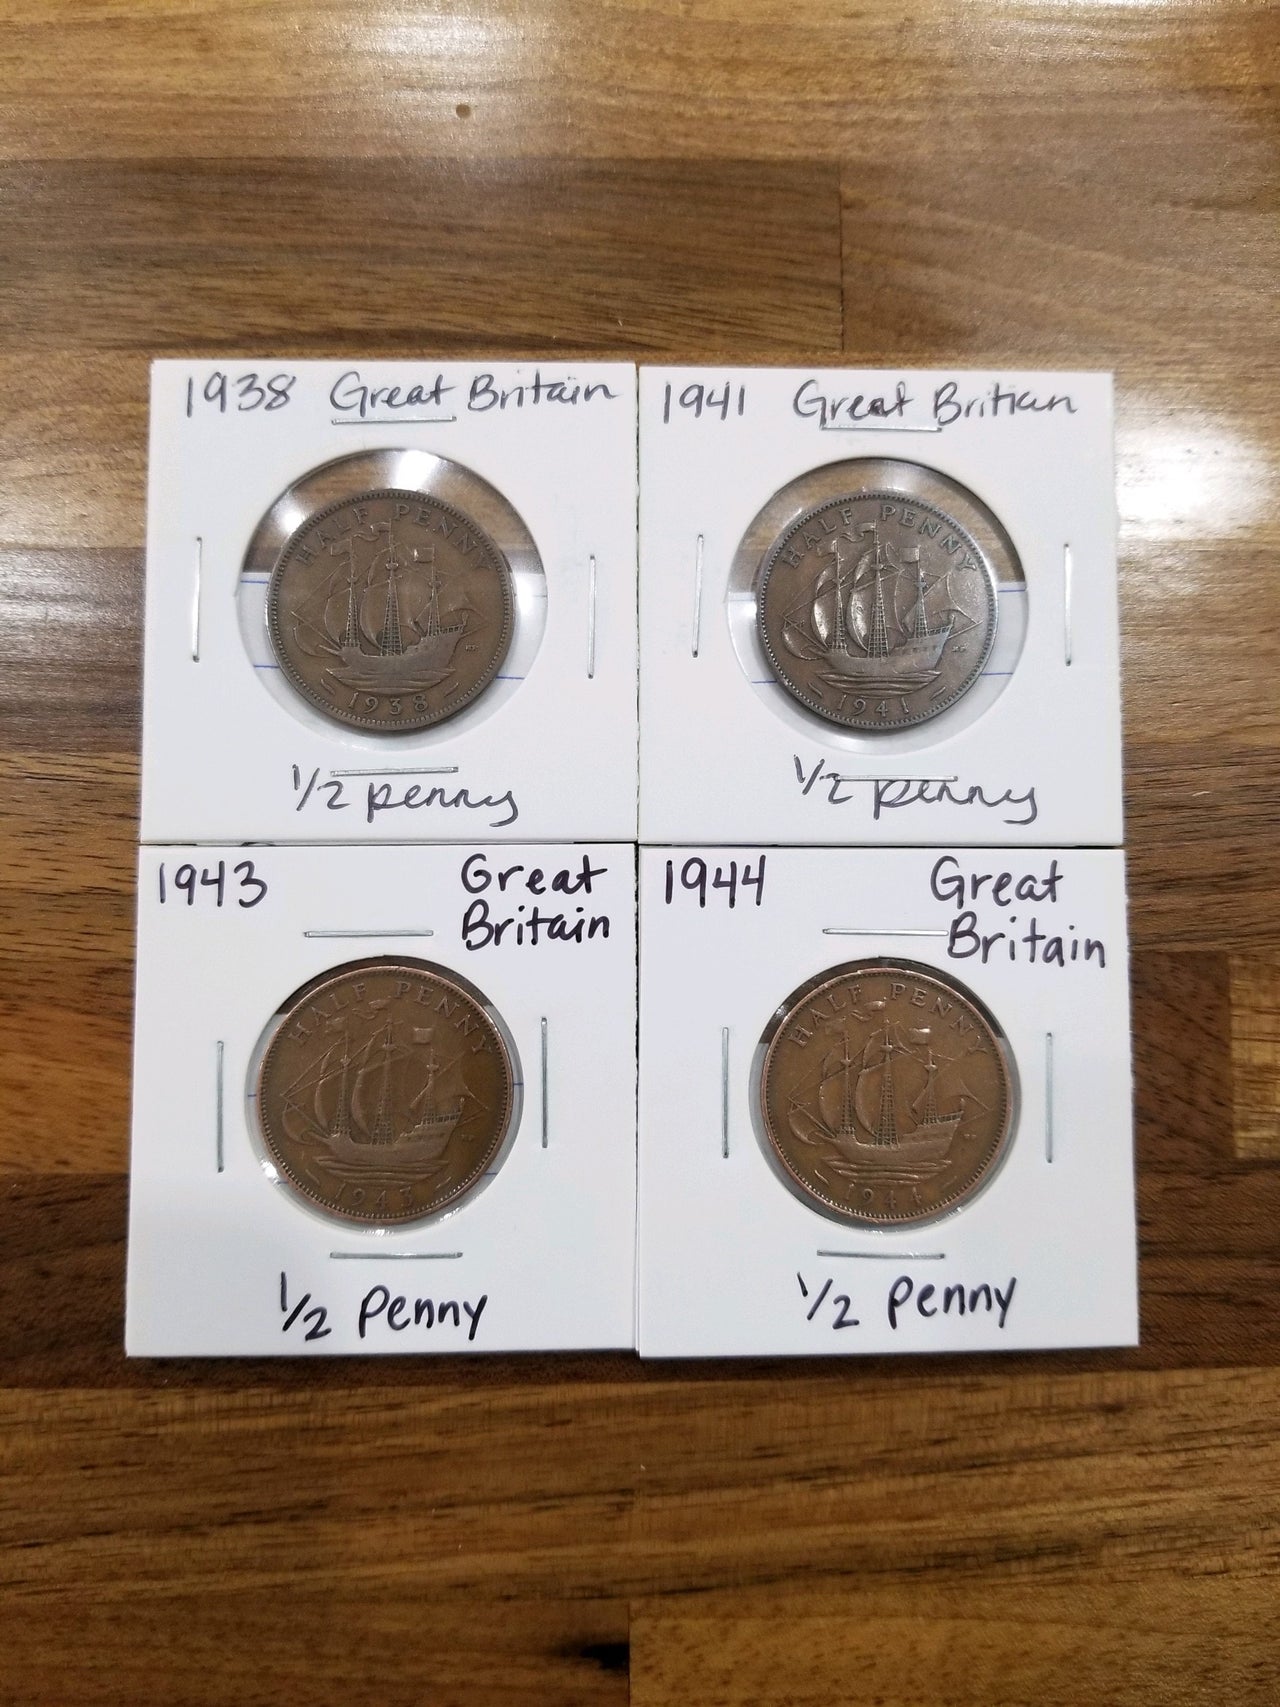 WW2 Great Britain coins.jpeg